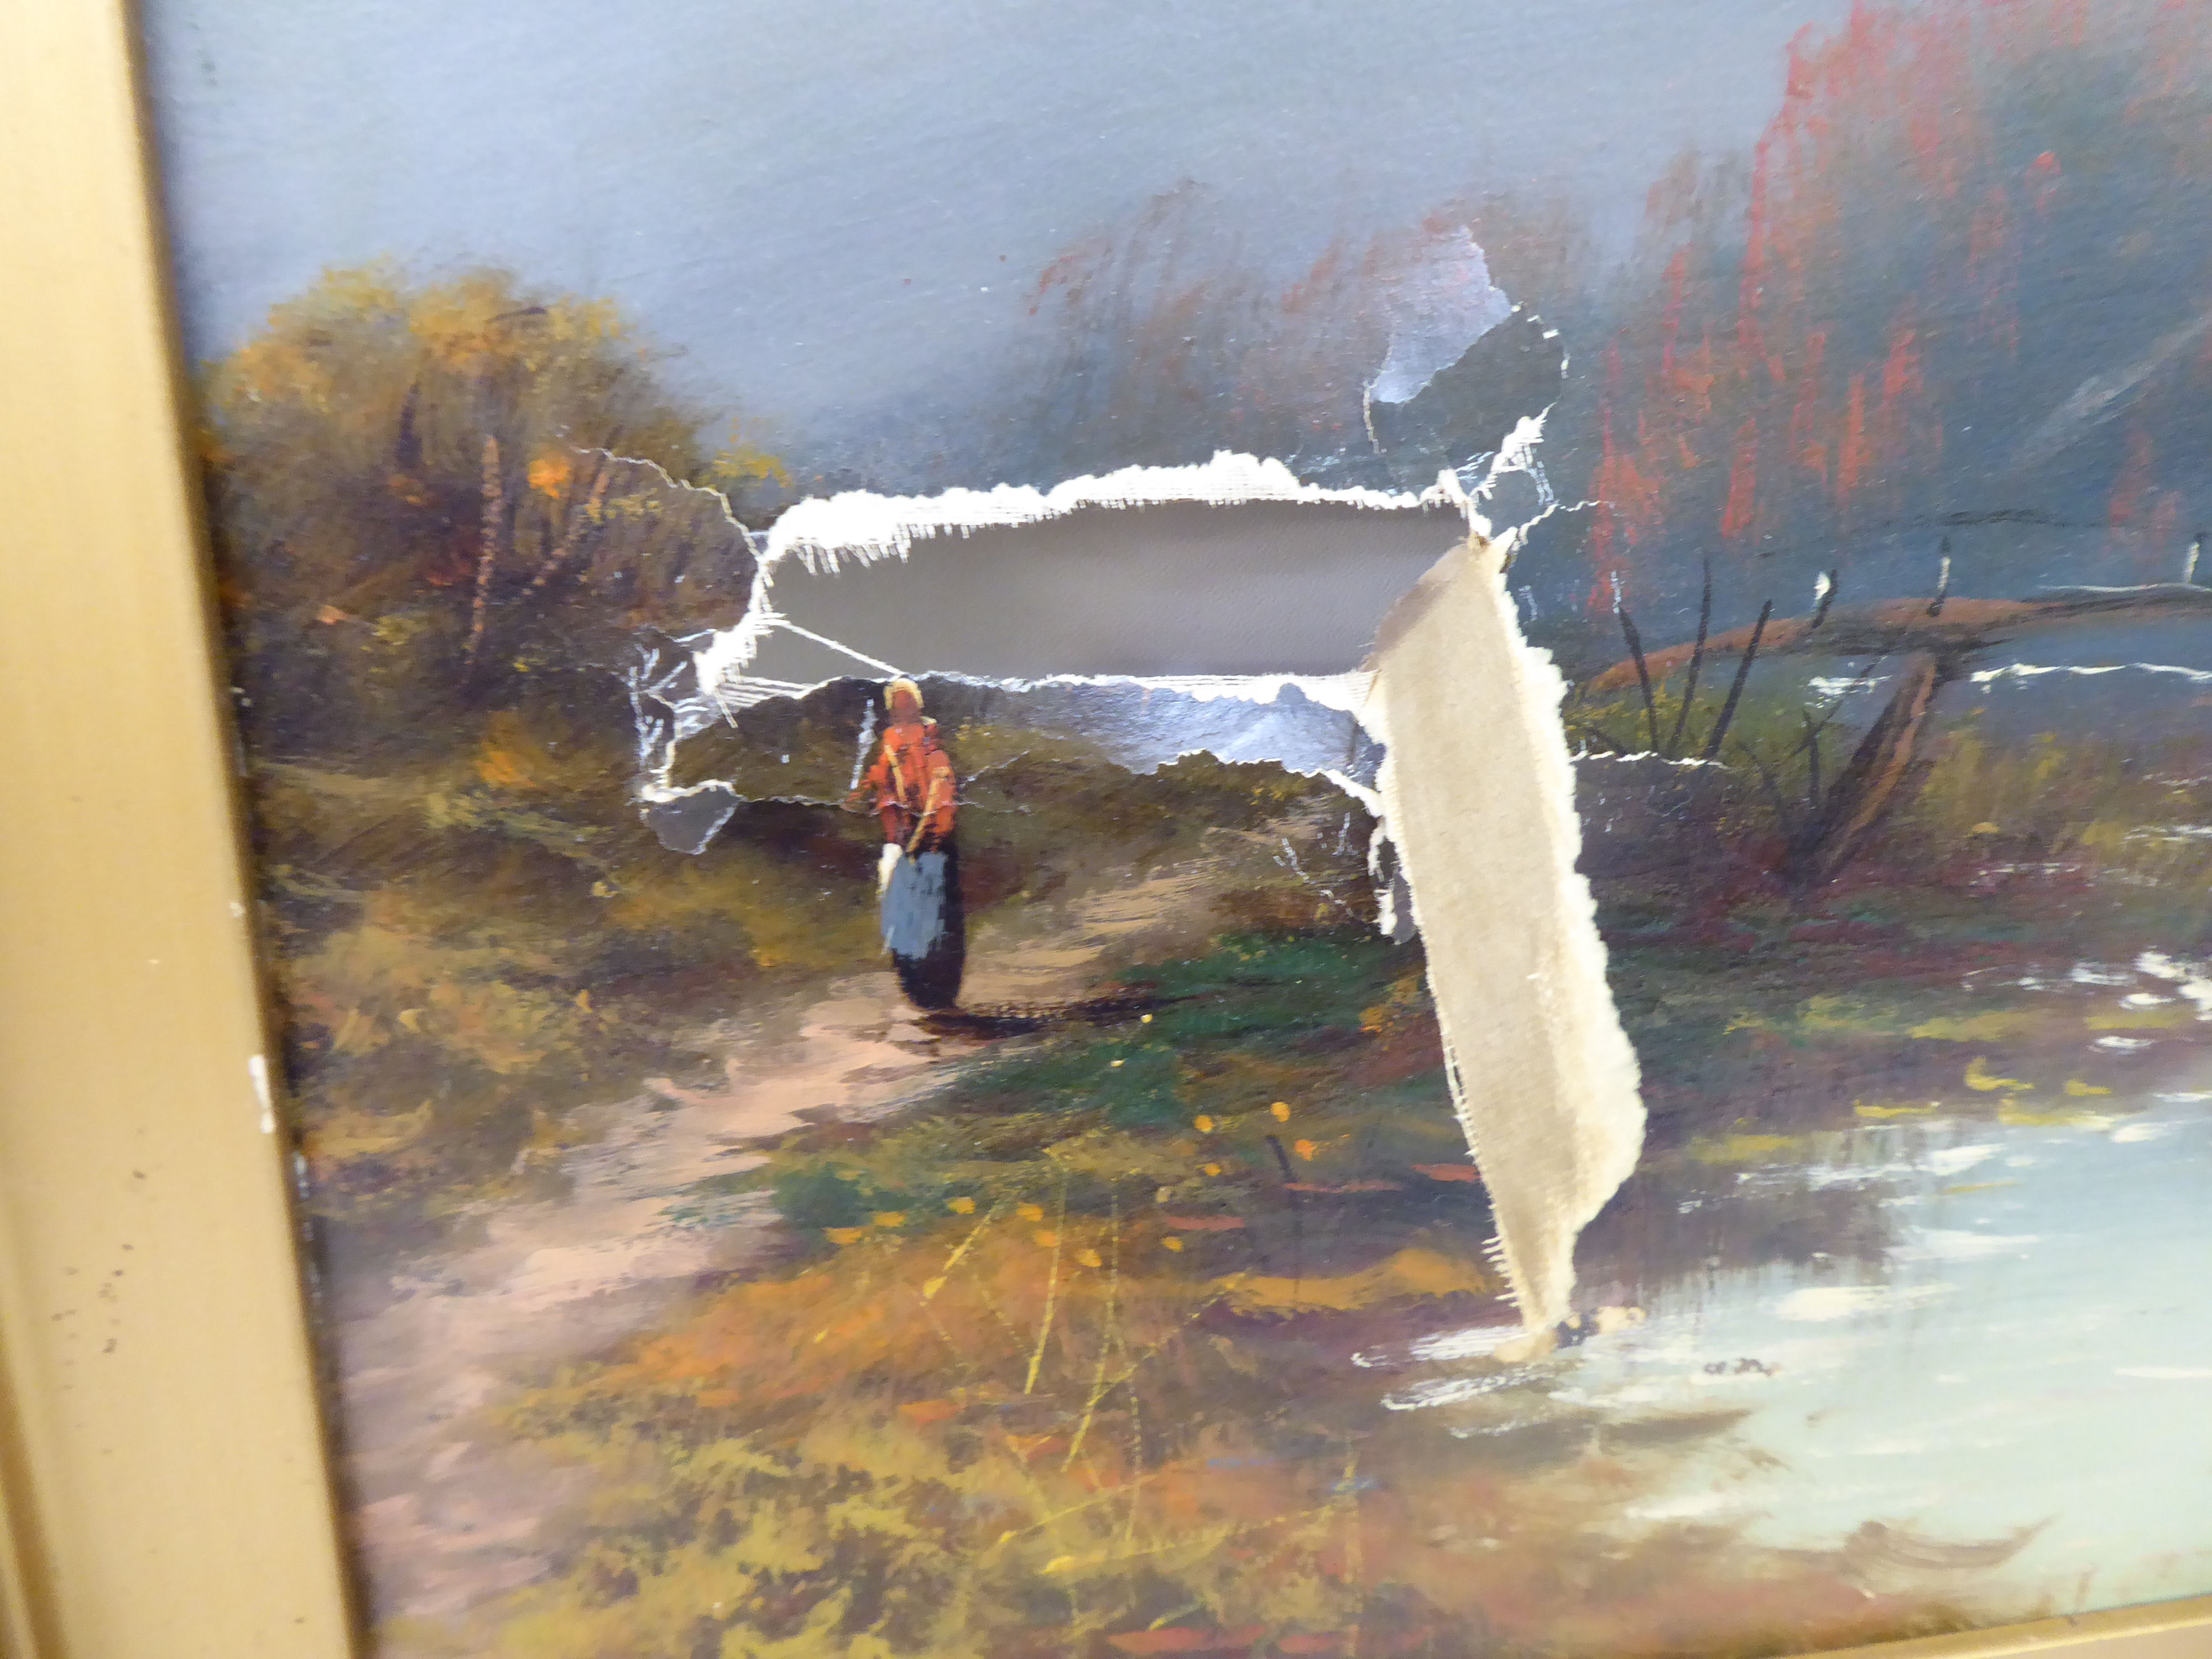 R Starkey - a highland lake scene  oil on canvas  bears a signature  16.5" x 19"  framed - Image 2 of 4